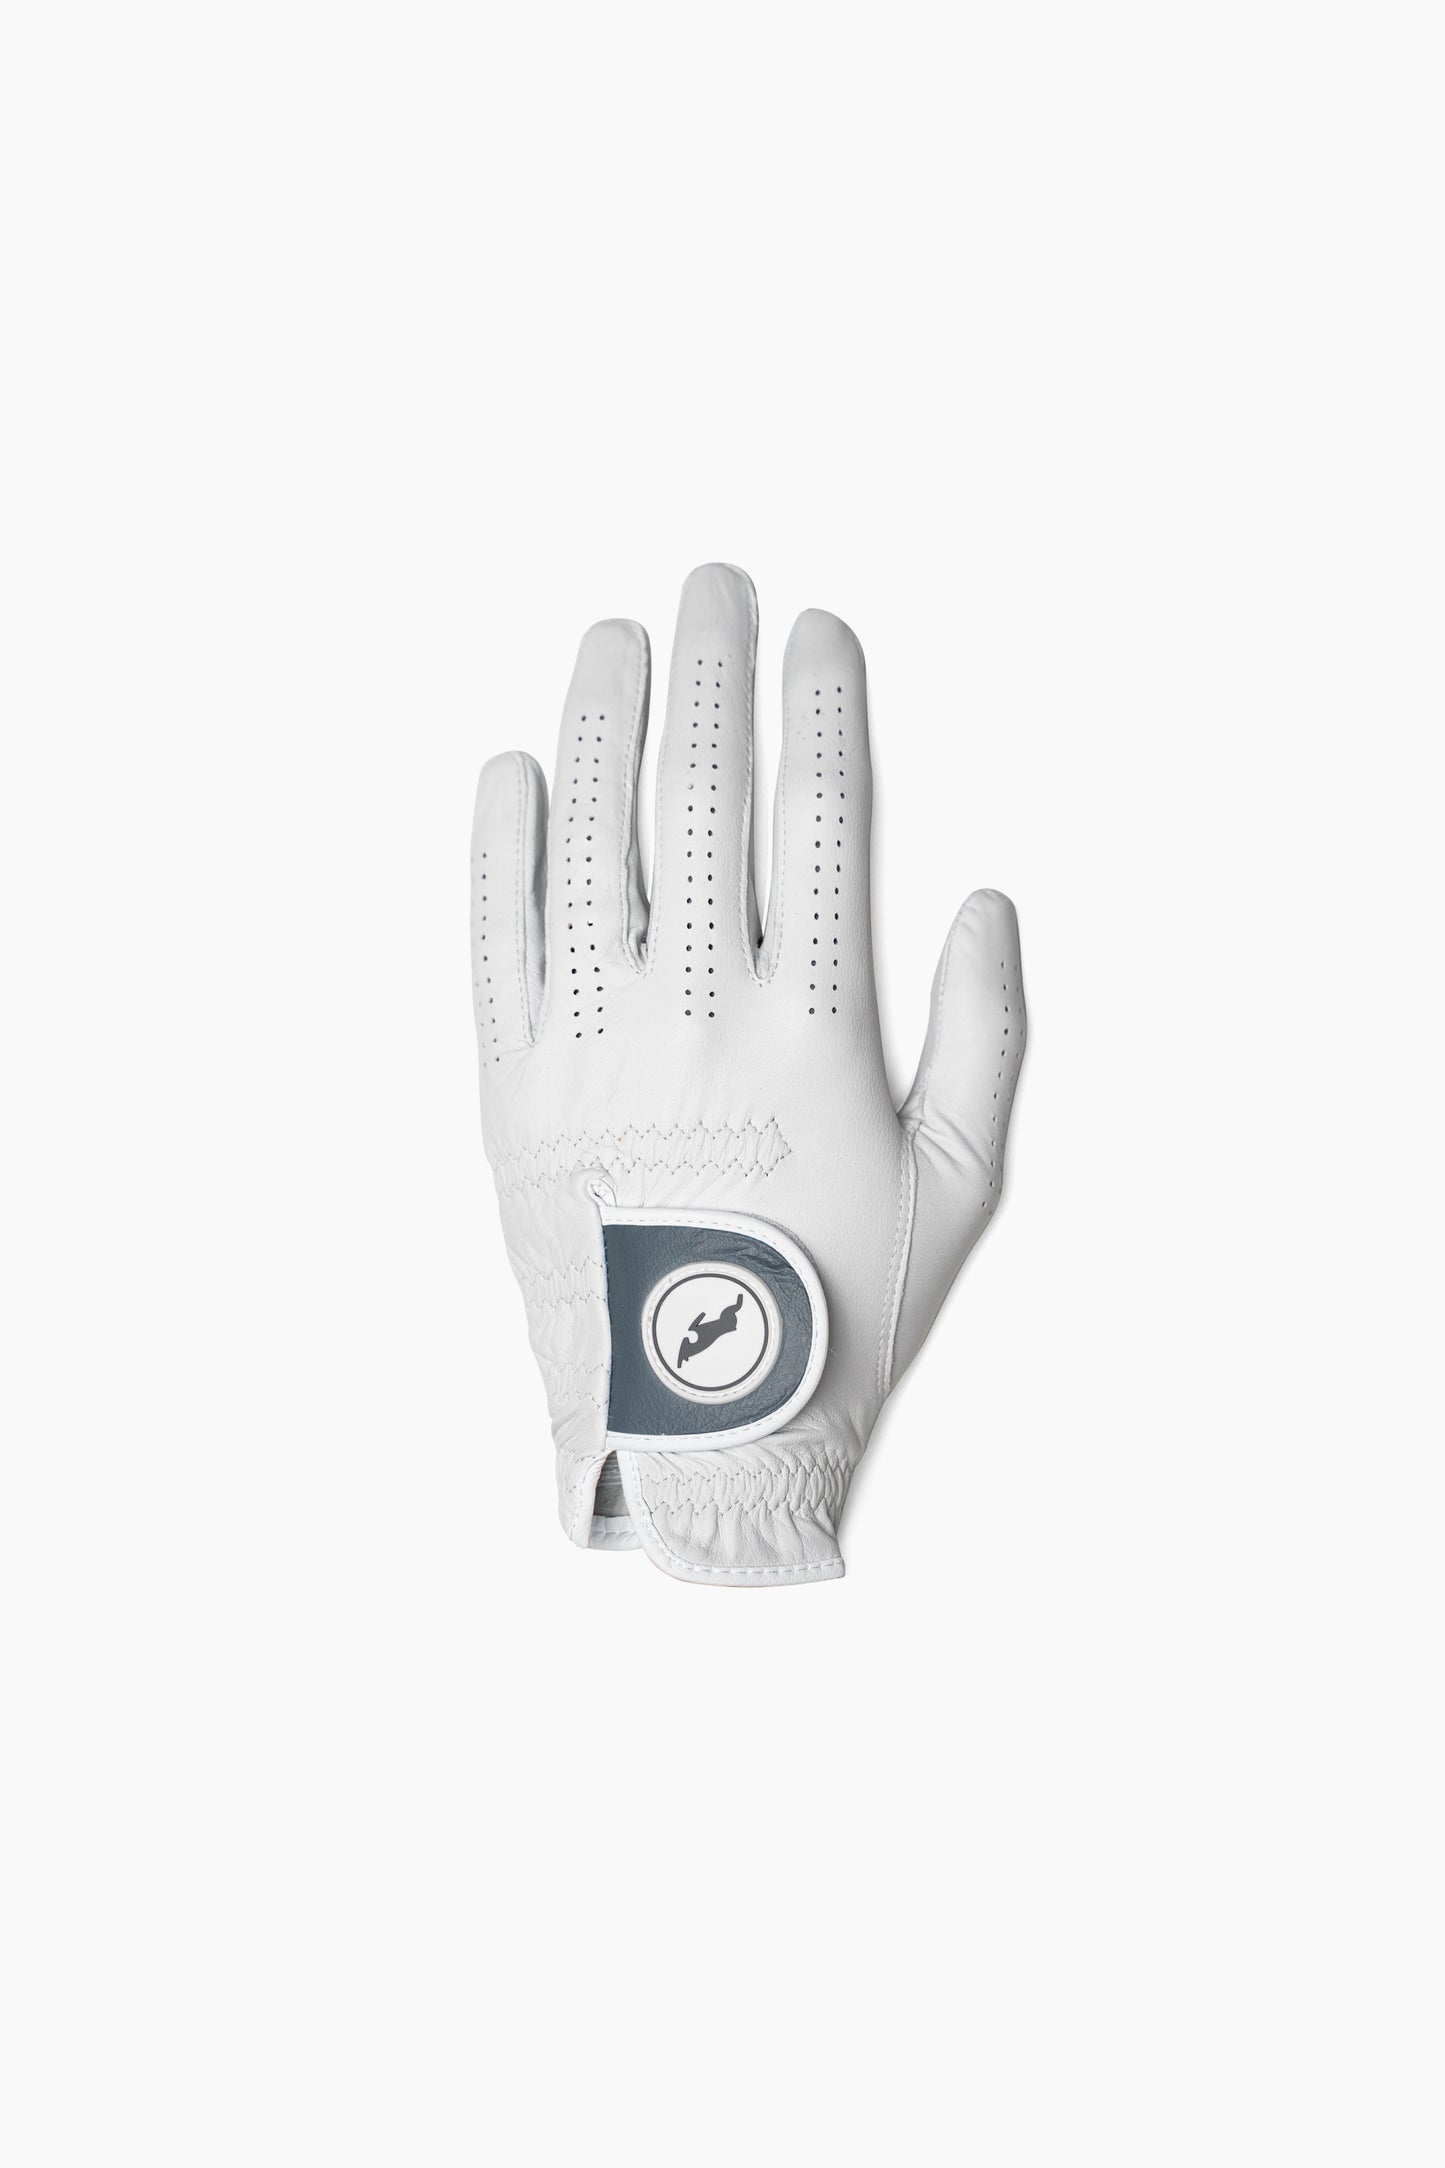 Grey Signature Glove